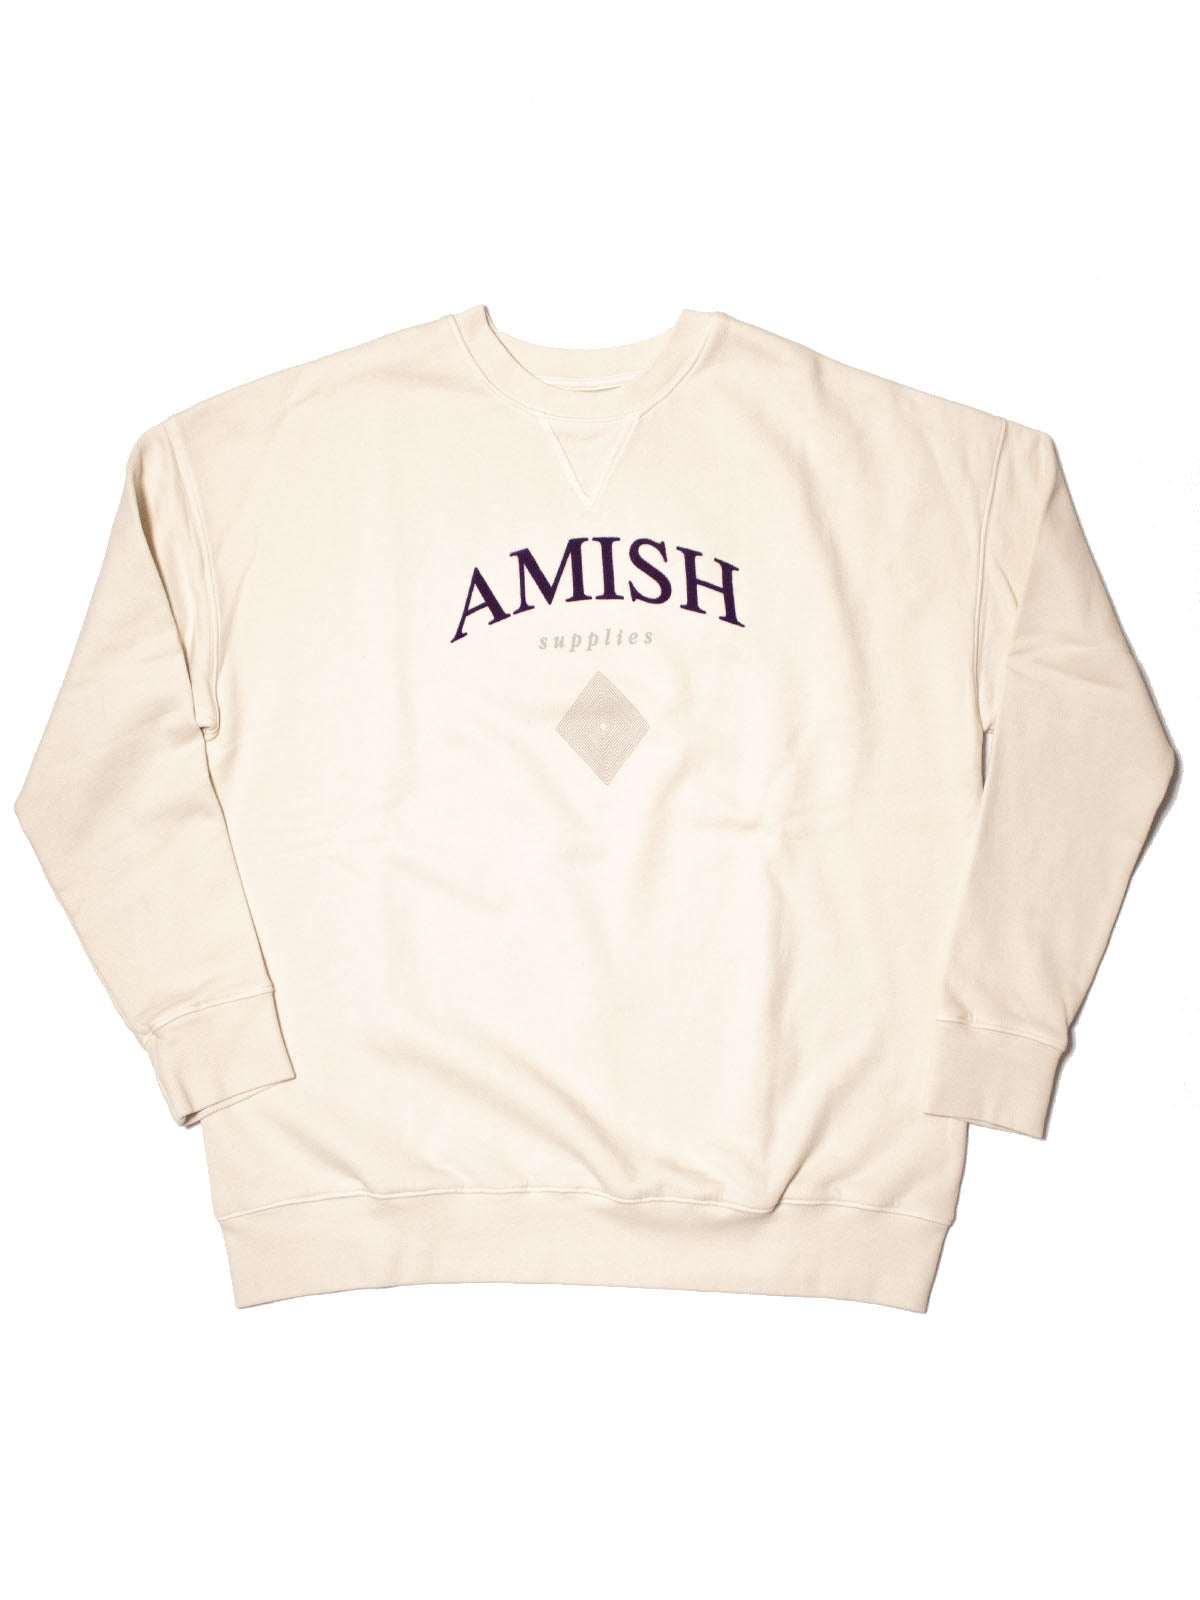 Maglioni Uomo Amish - Crew Over "Supplies" Sweater - Bianco